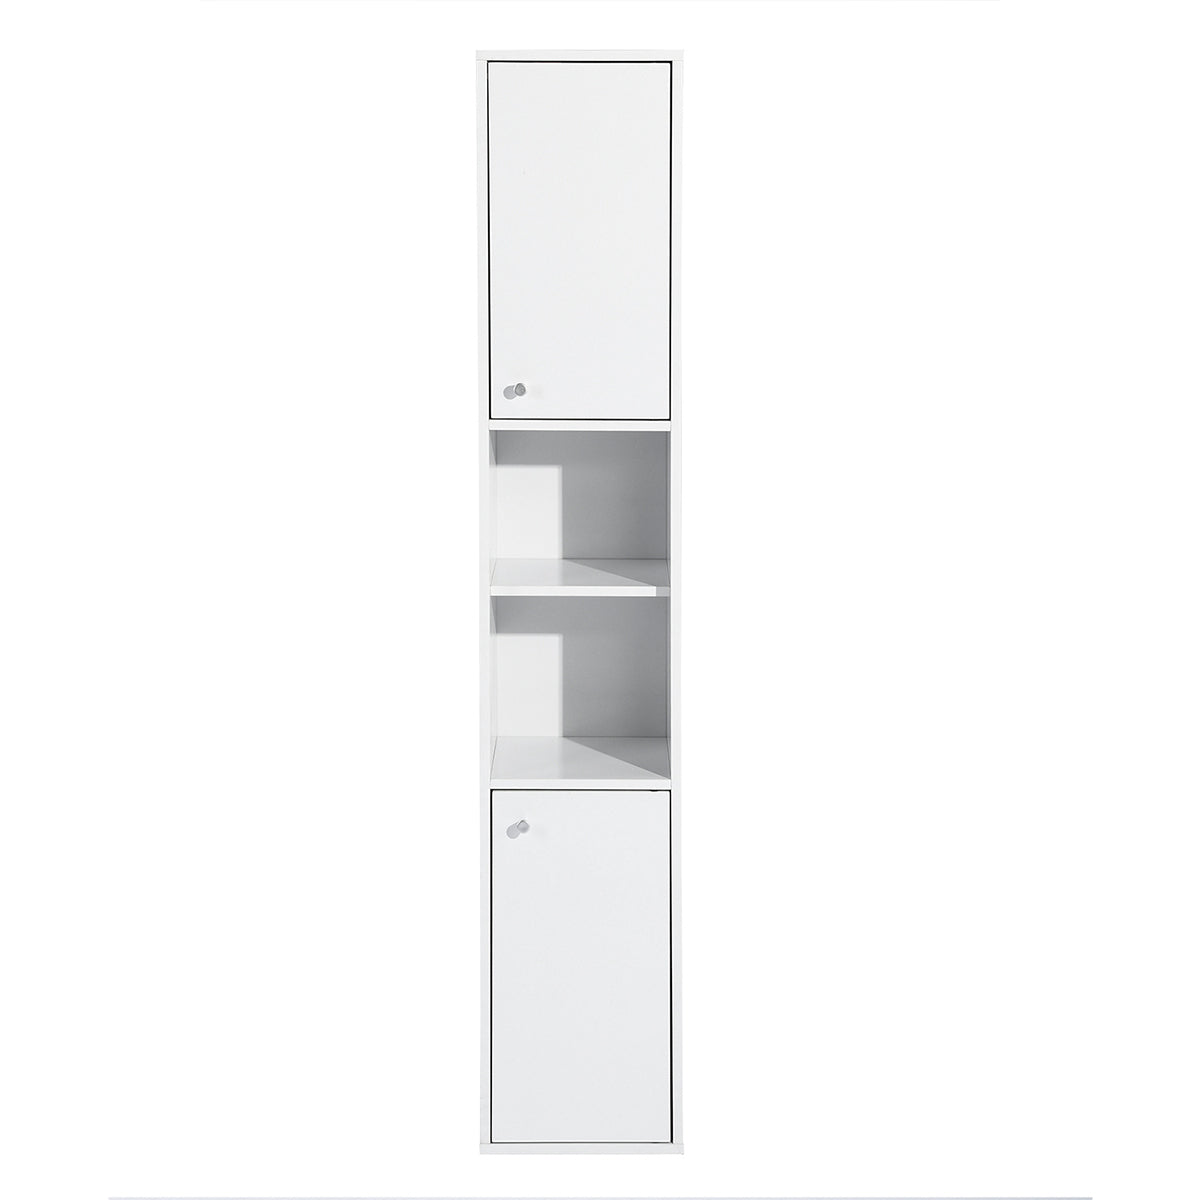 Bathroom Standing Cabinet with Shelfs